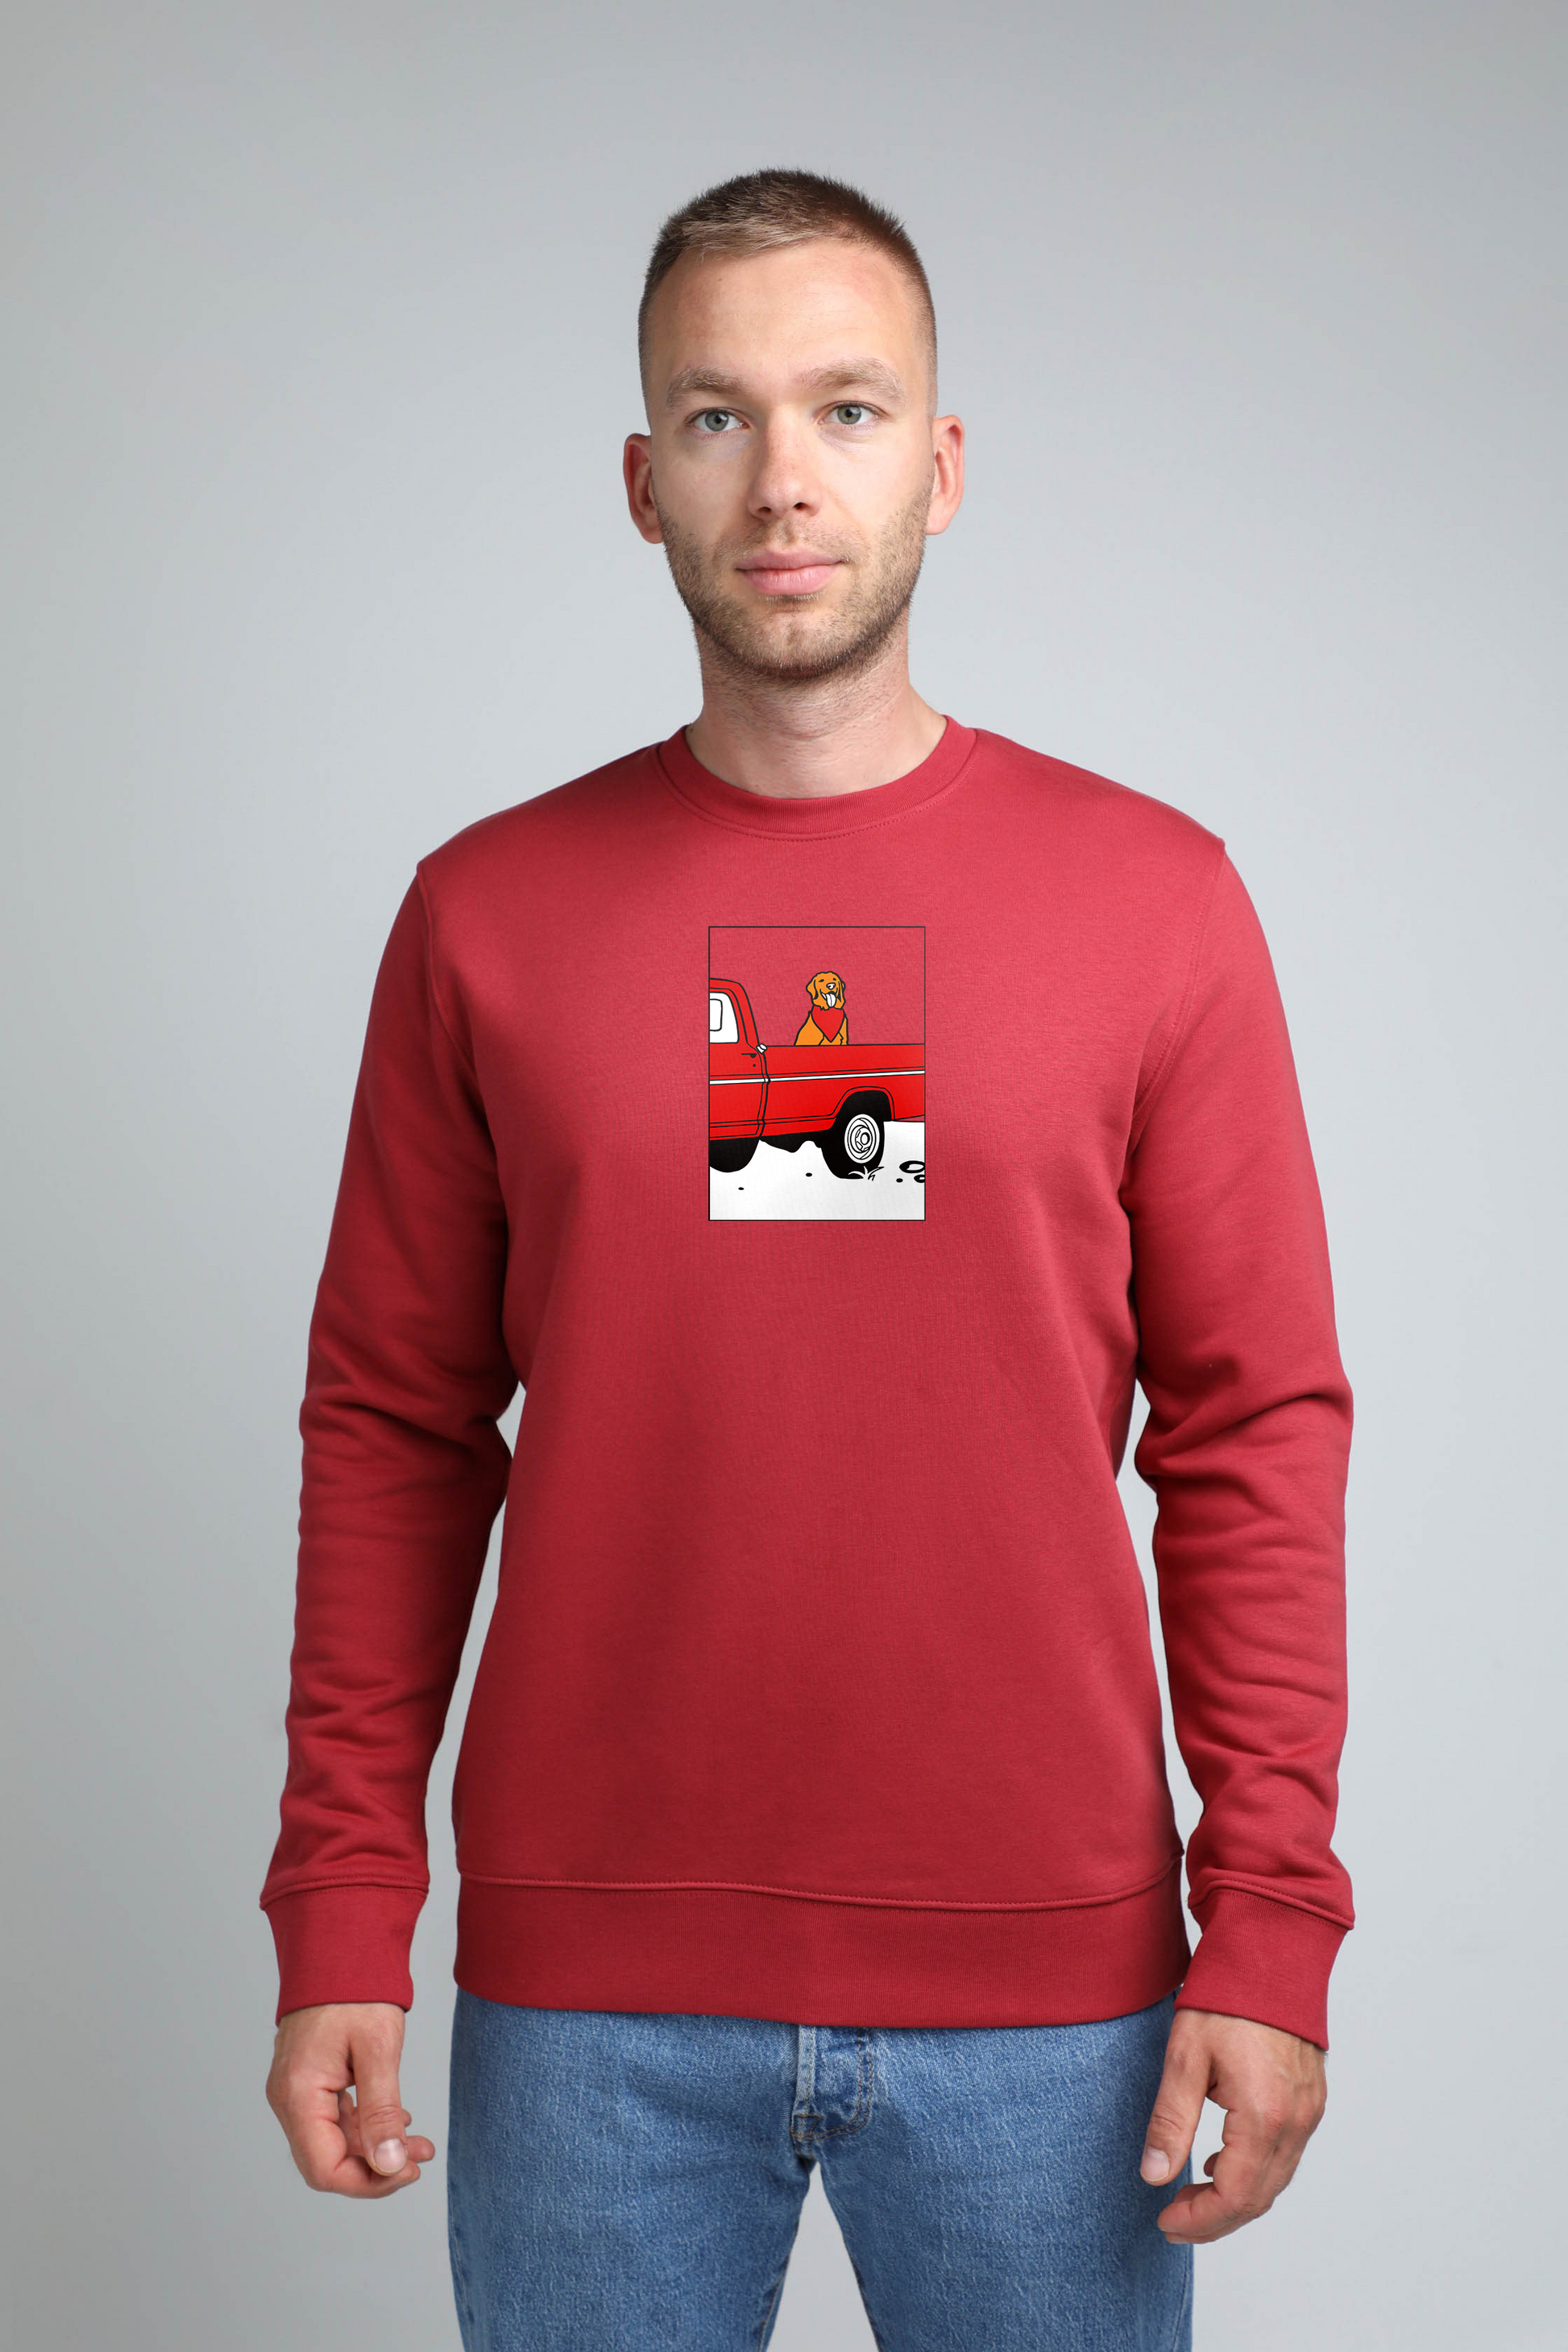 Pickup truck dog | Crew neck sweatshirt with dog. Regular fit | Unisex by My Wild Other